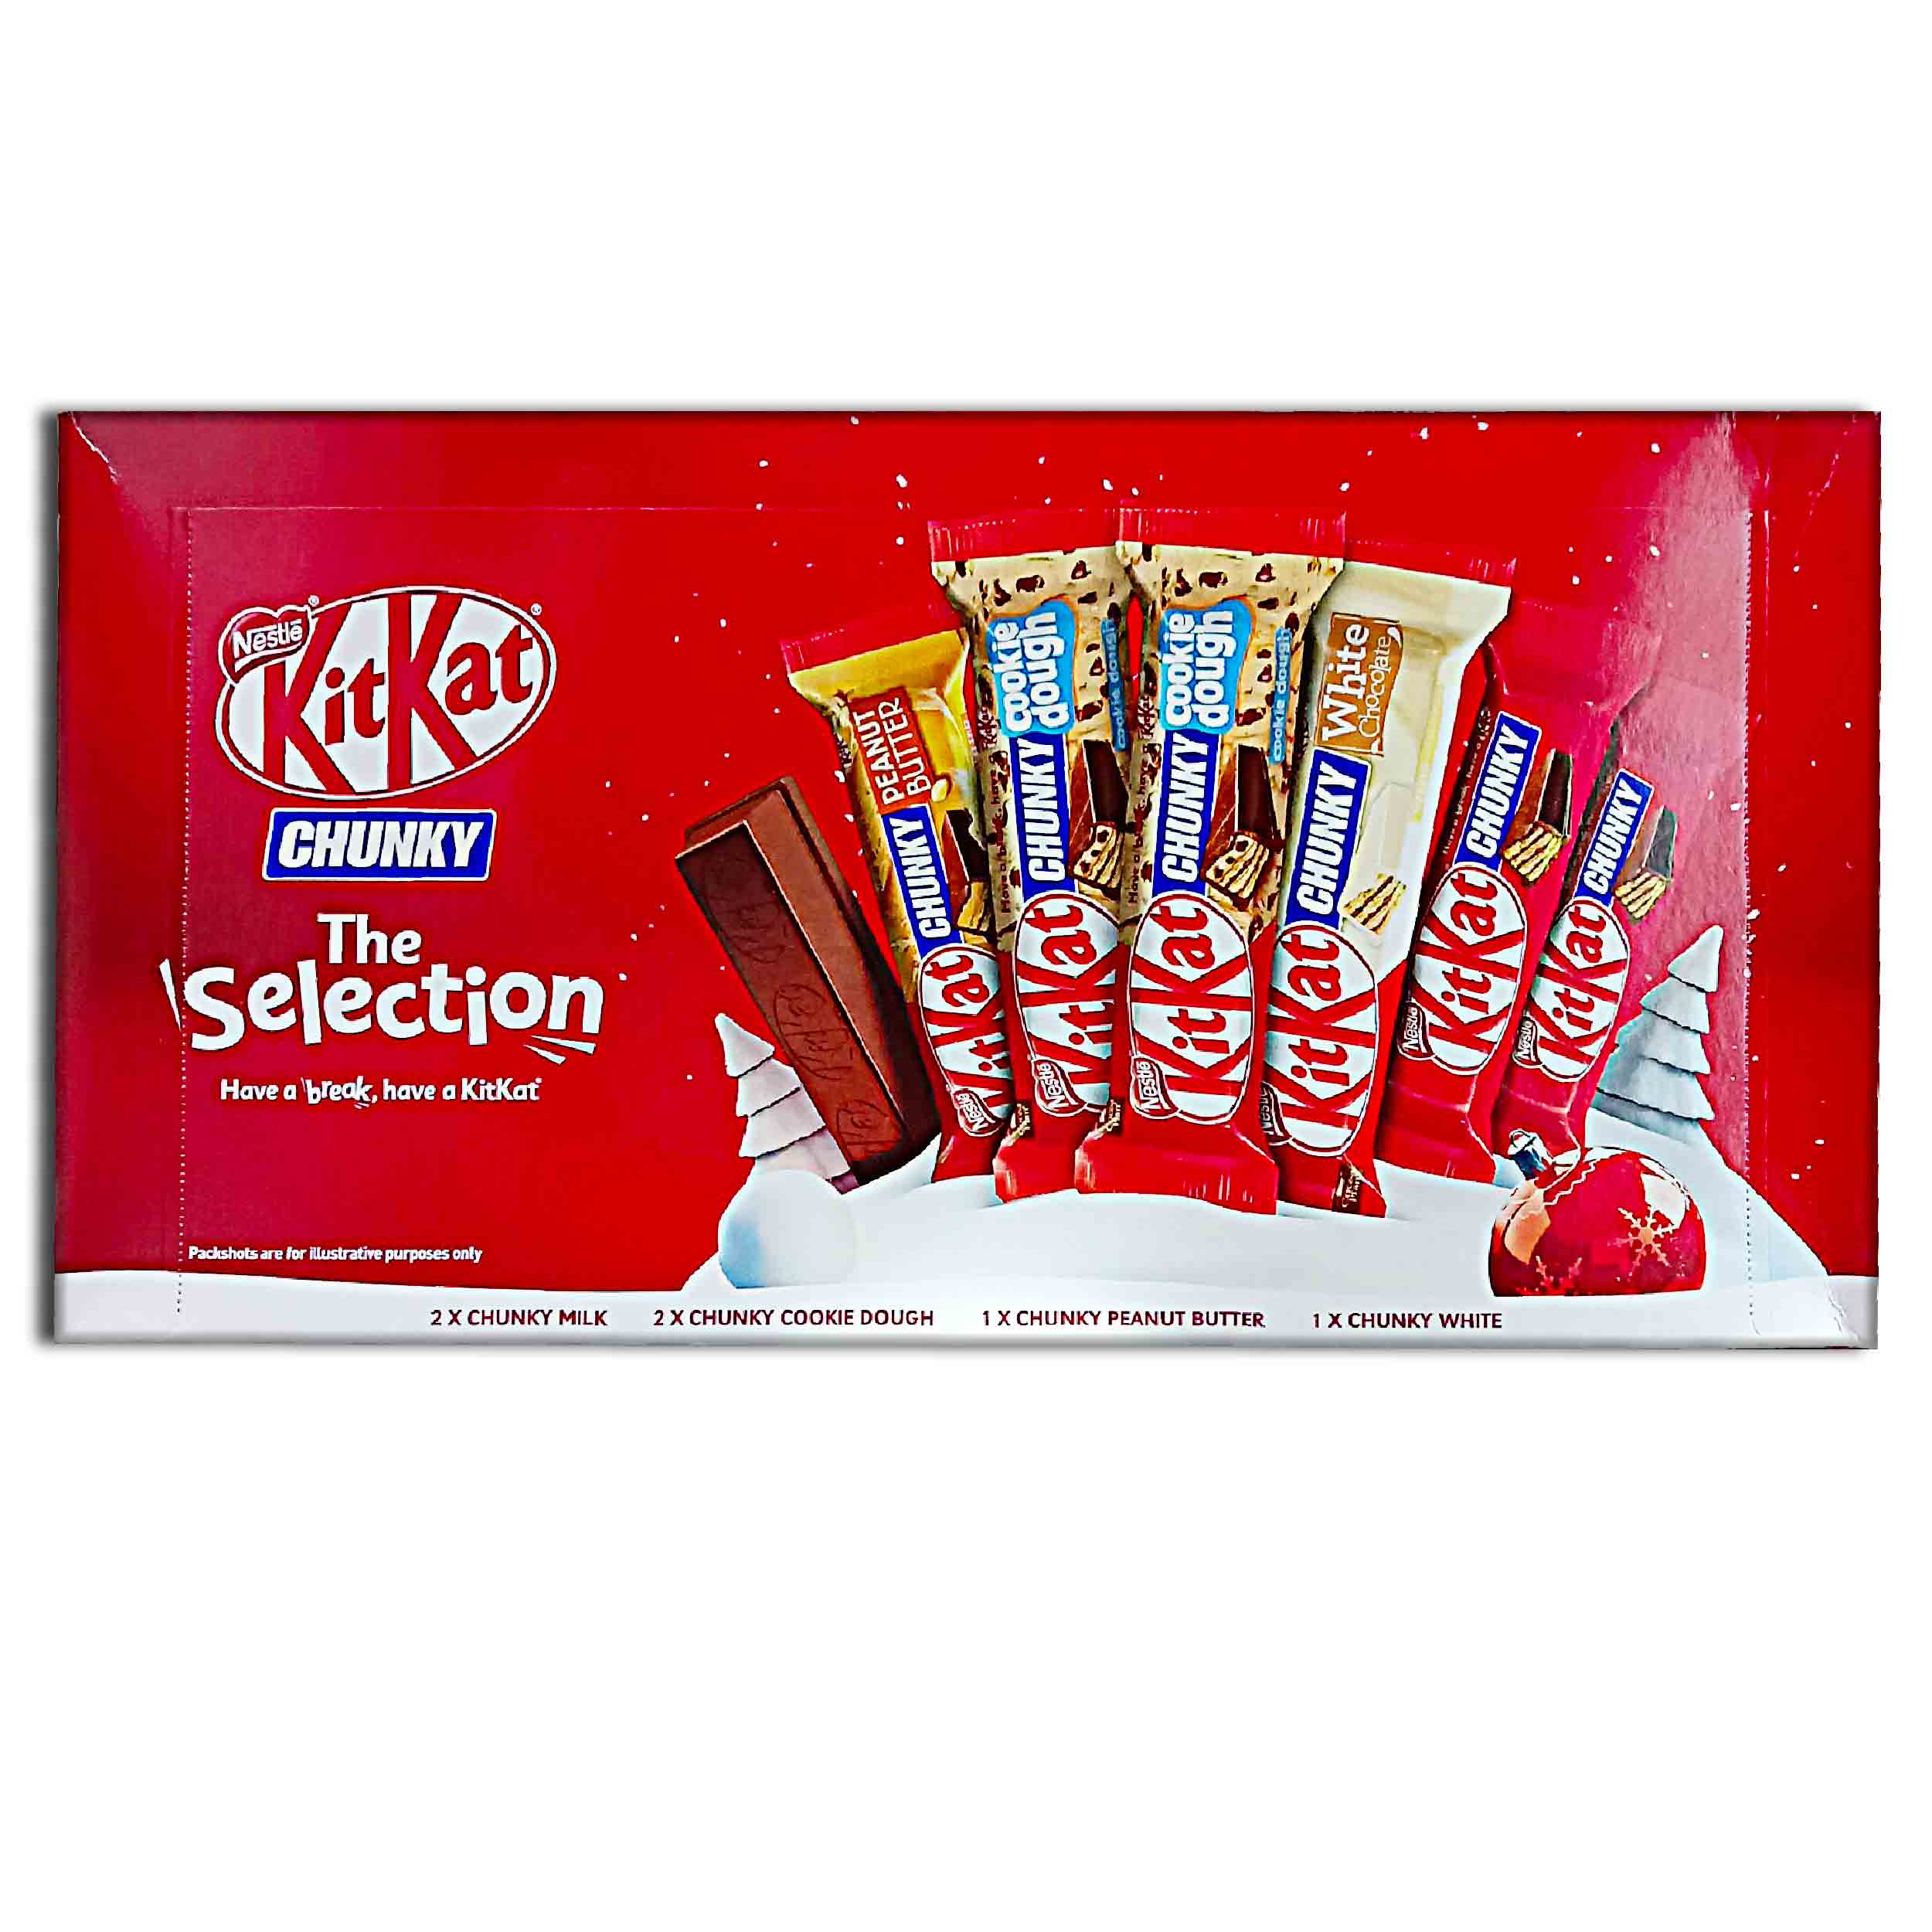 Kitkat Chunky The Selection Box 221g